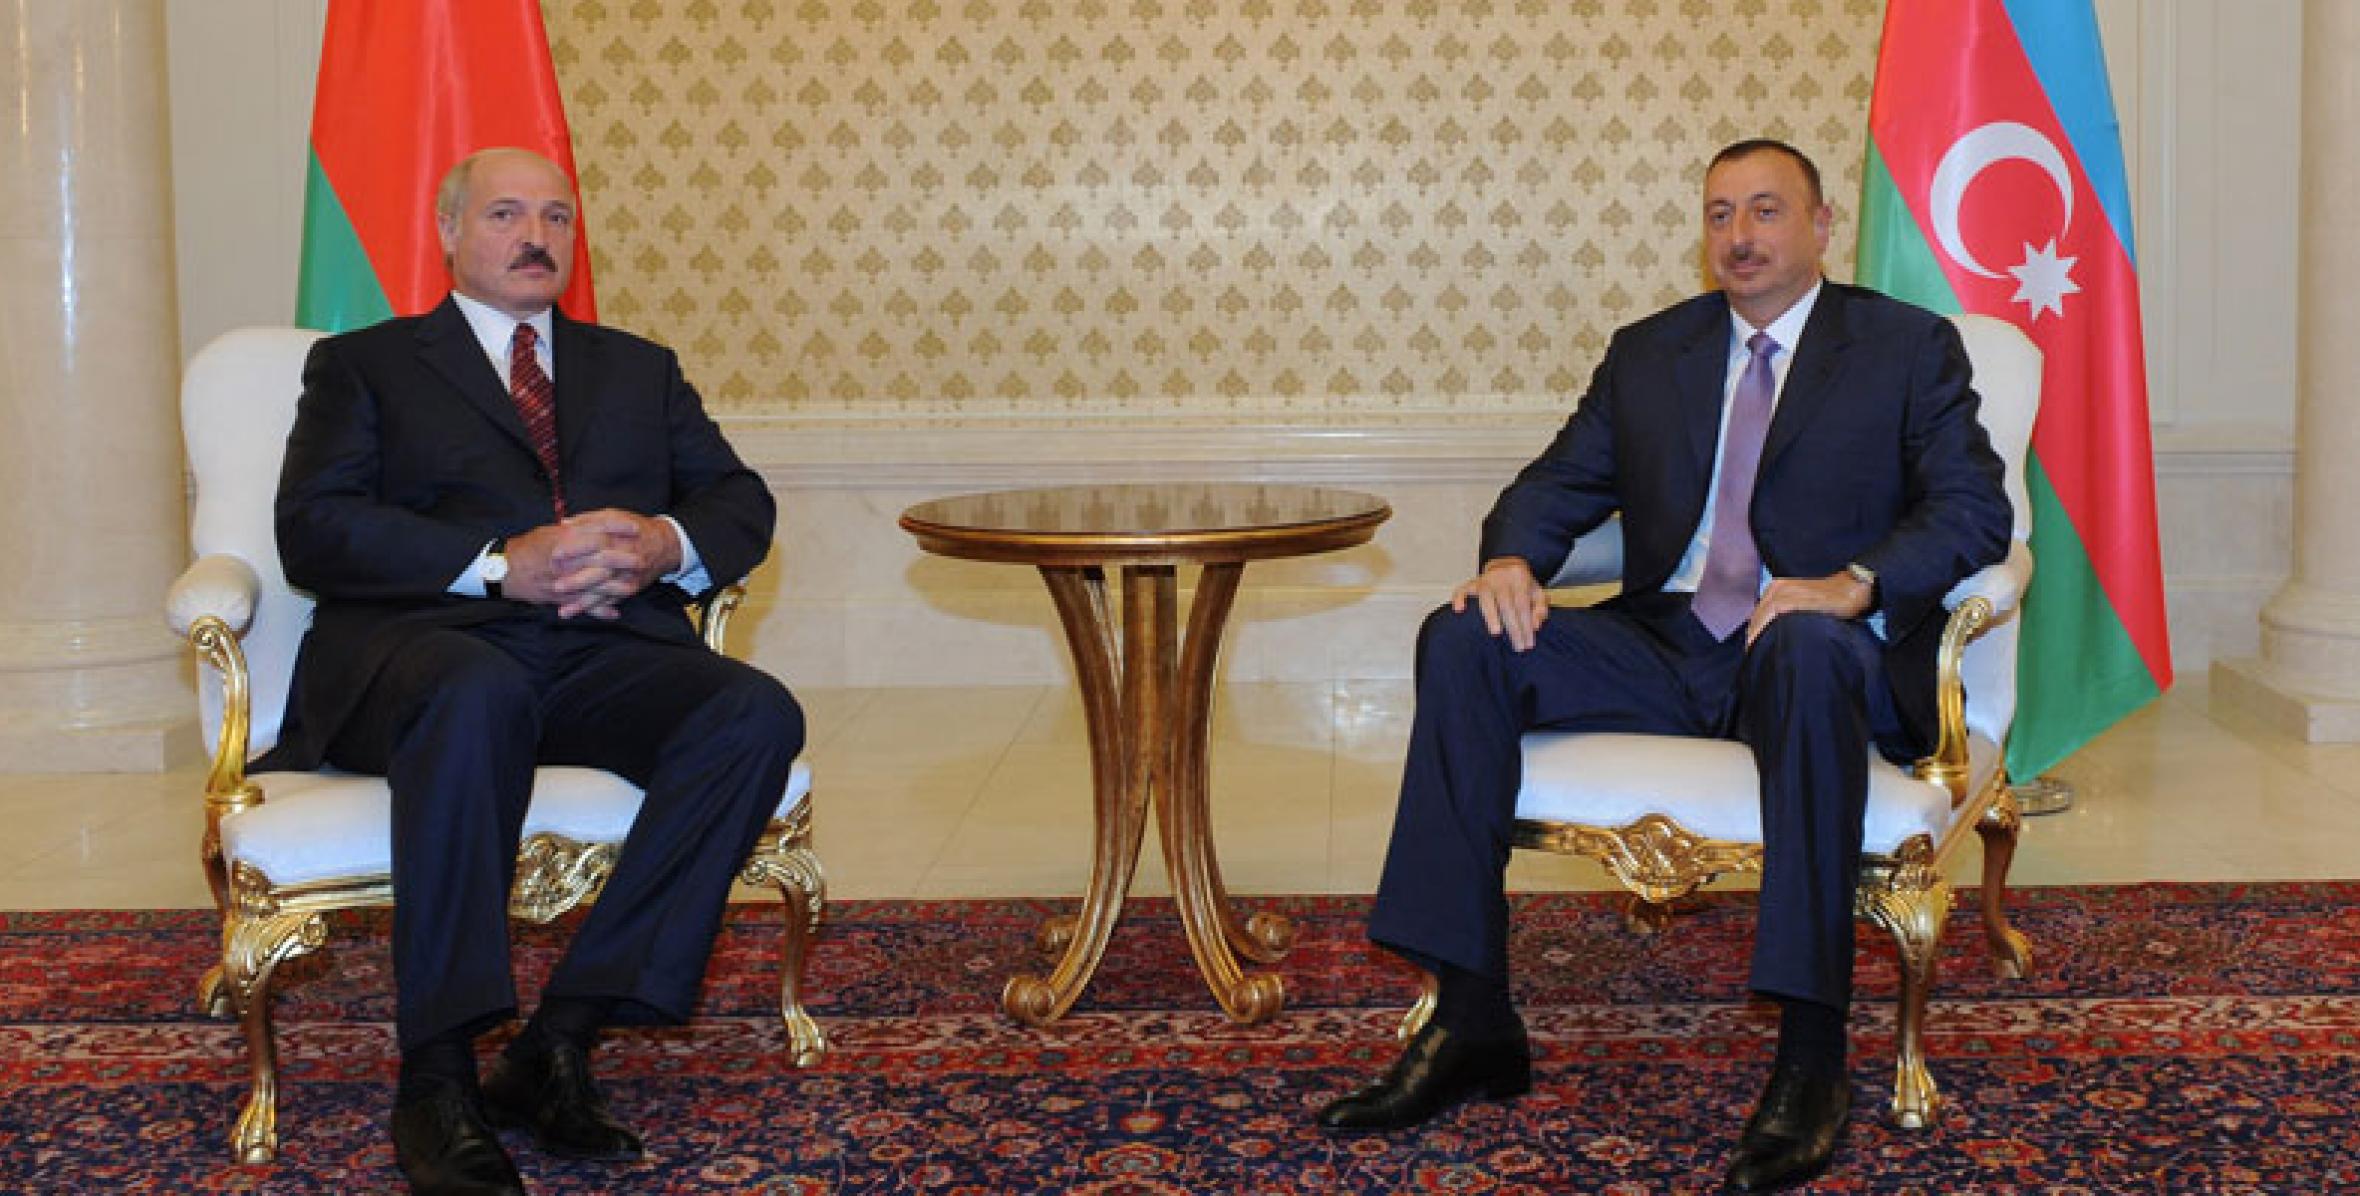 Состоялась встреча Президента Ильхама Алиева и Президента Республики Беларусь Александра Лукашенко один на один